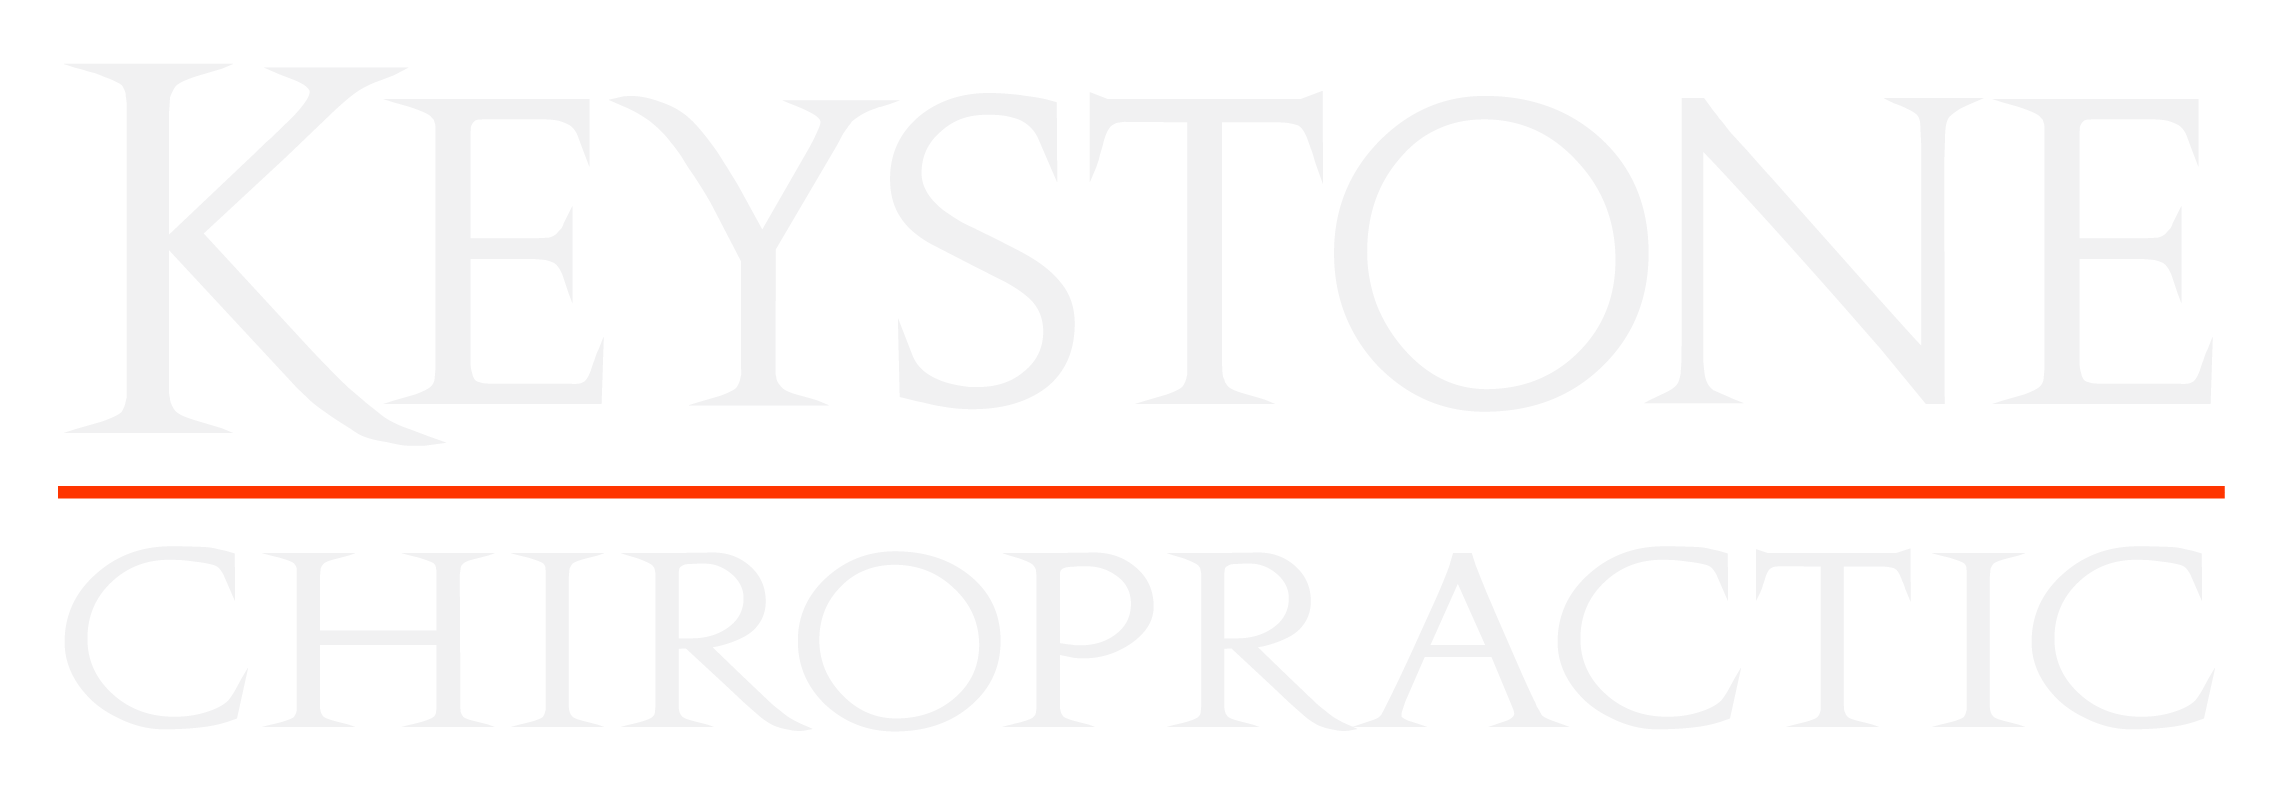 Keystone Chiropractic | Springfield IL Chiropractor